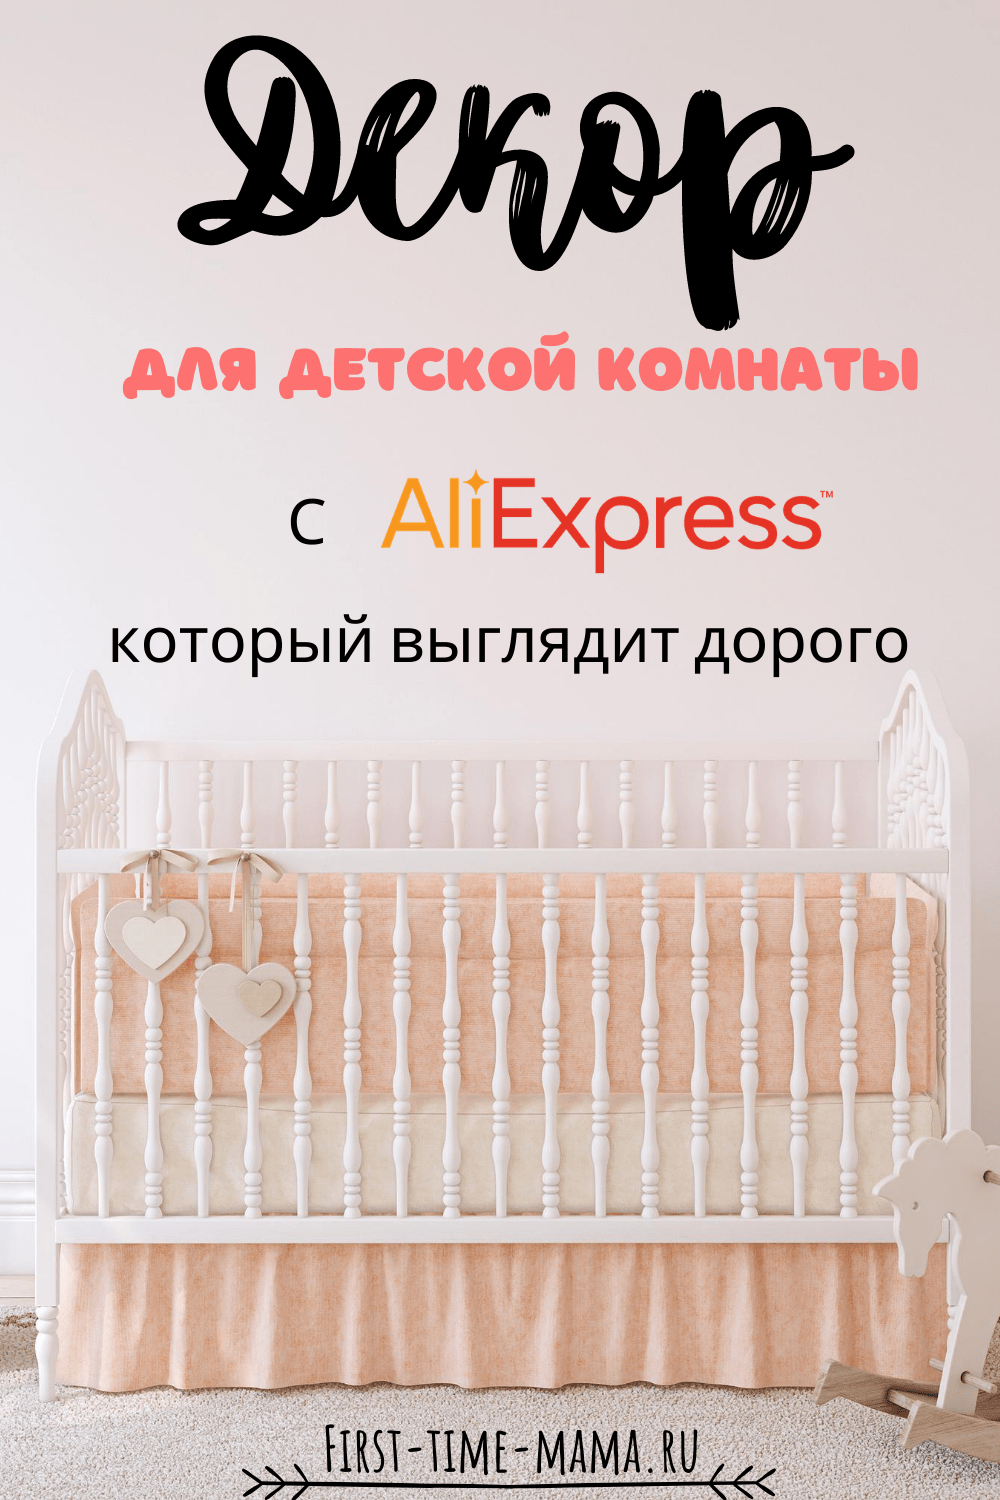 Интерьер и декор детской комнаты с Алиэкспресс | Впервые мама first-time-mama.ru